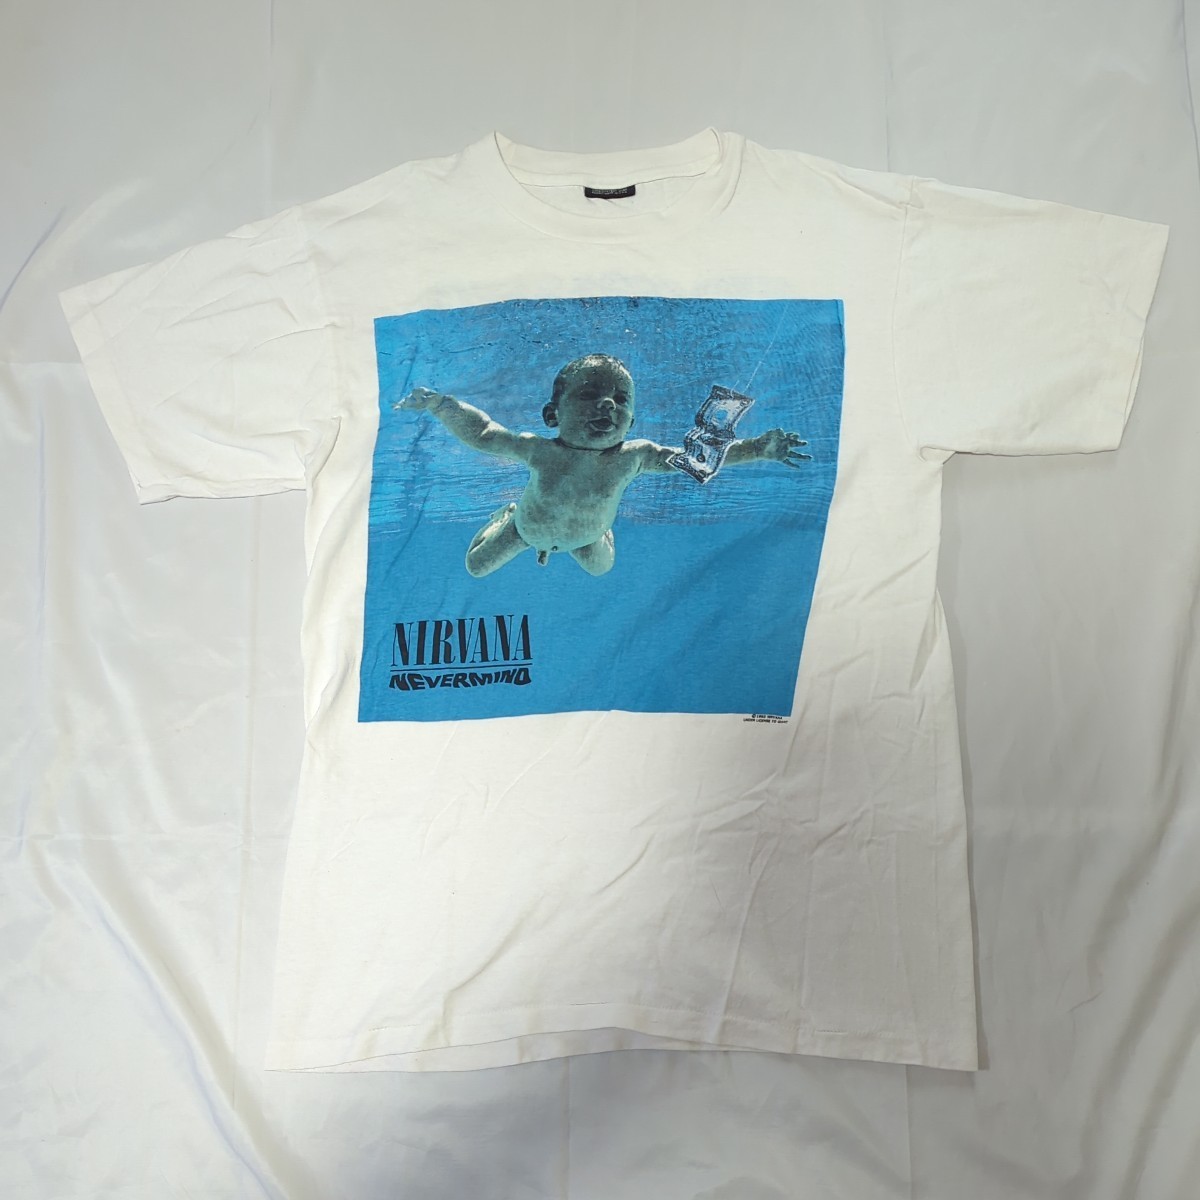 Yahoo!オークション -「nirvana nevermind」(Tシャツ) (記念品、思い出 